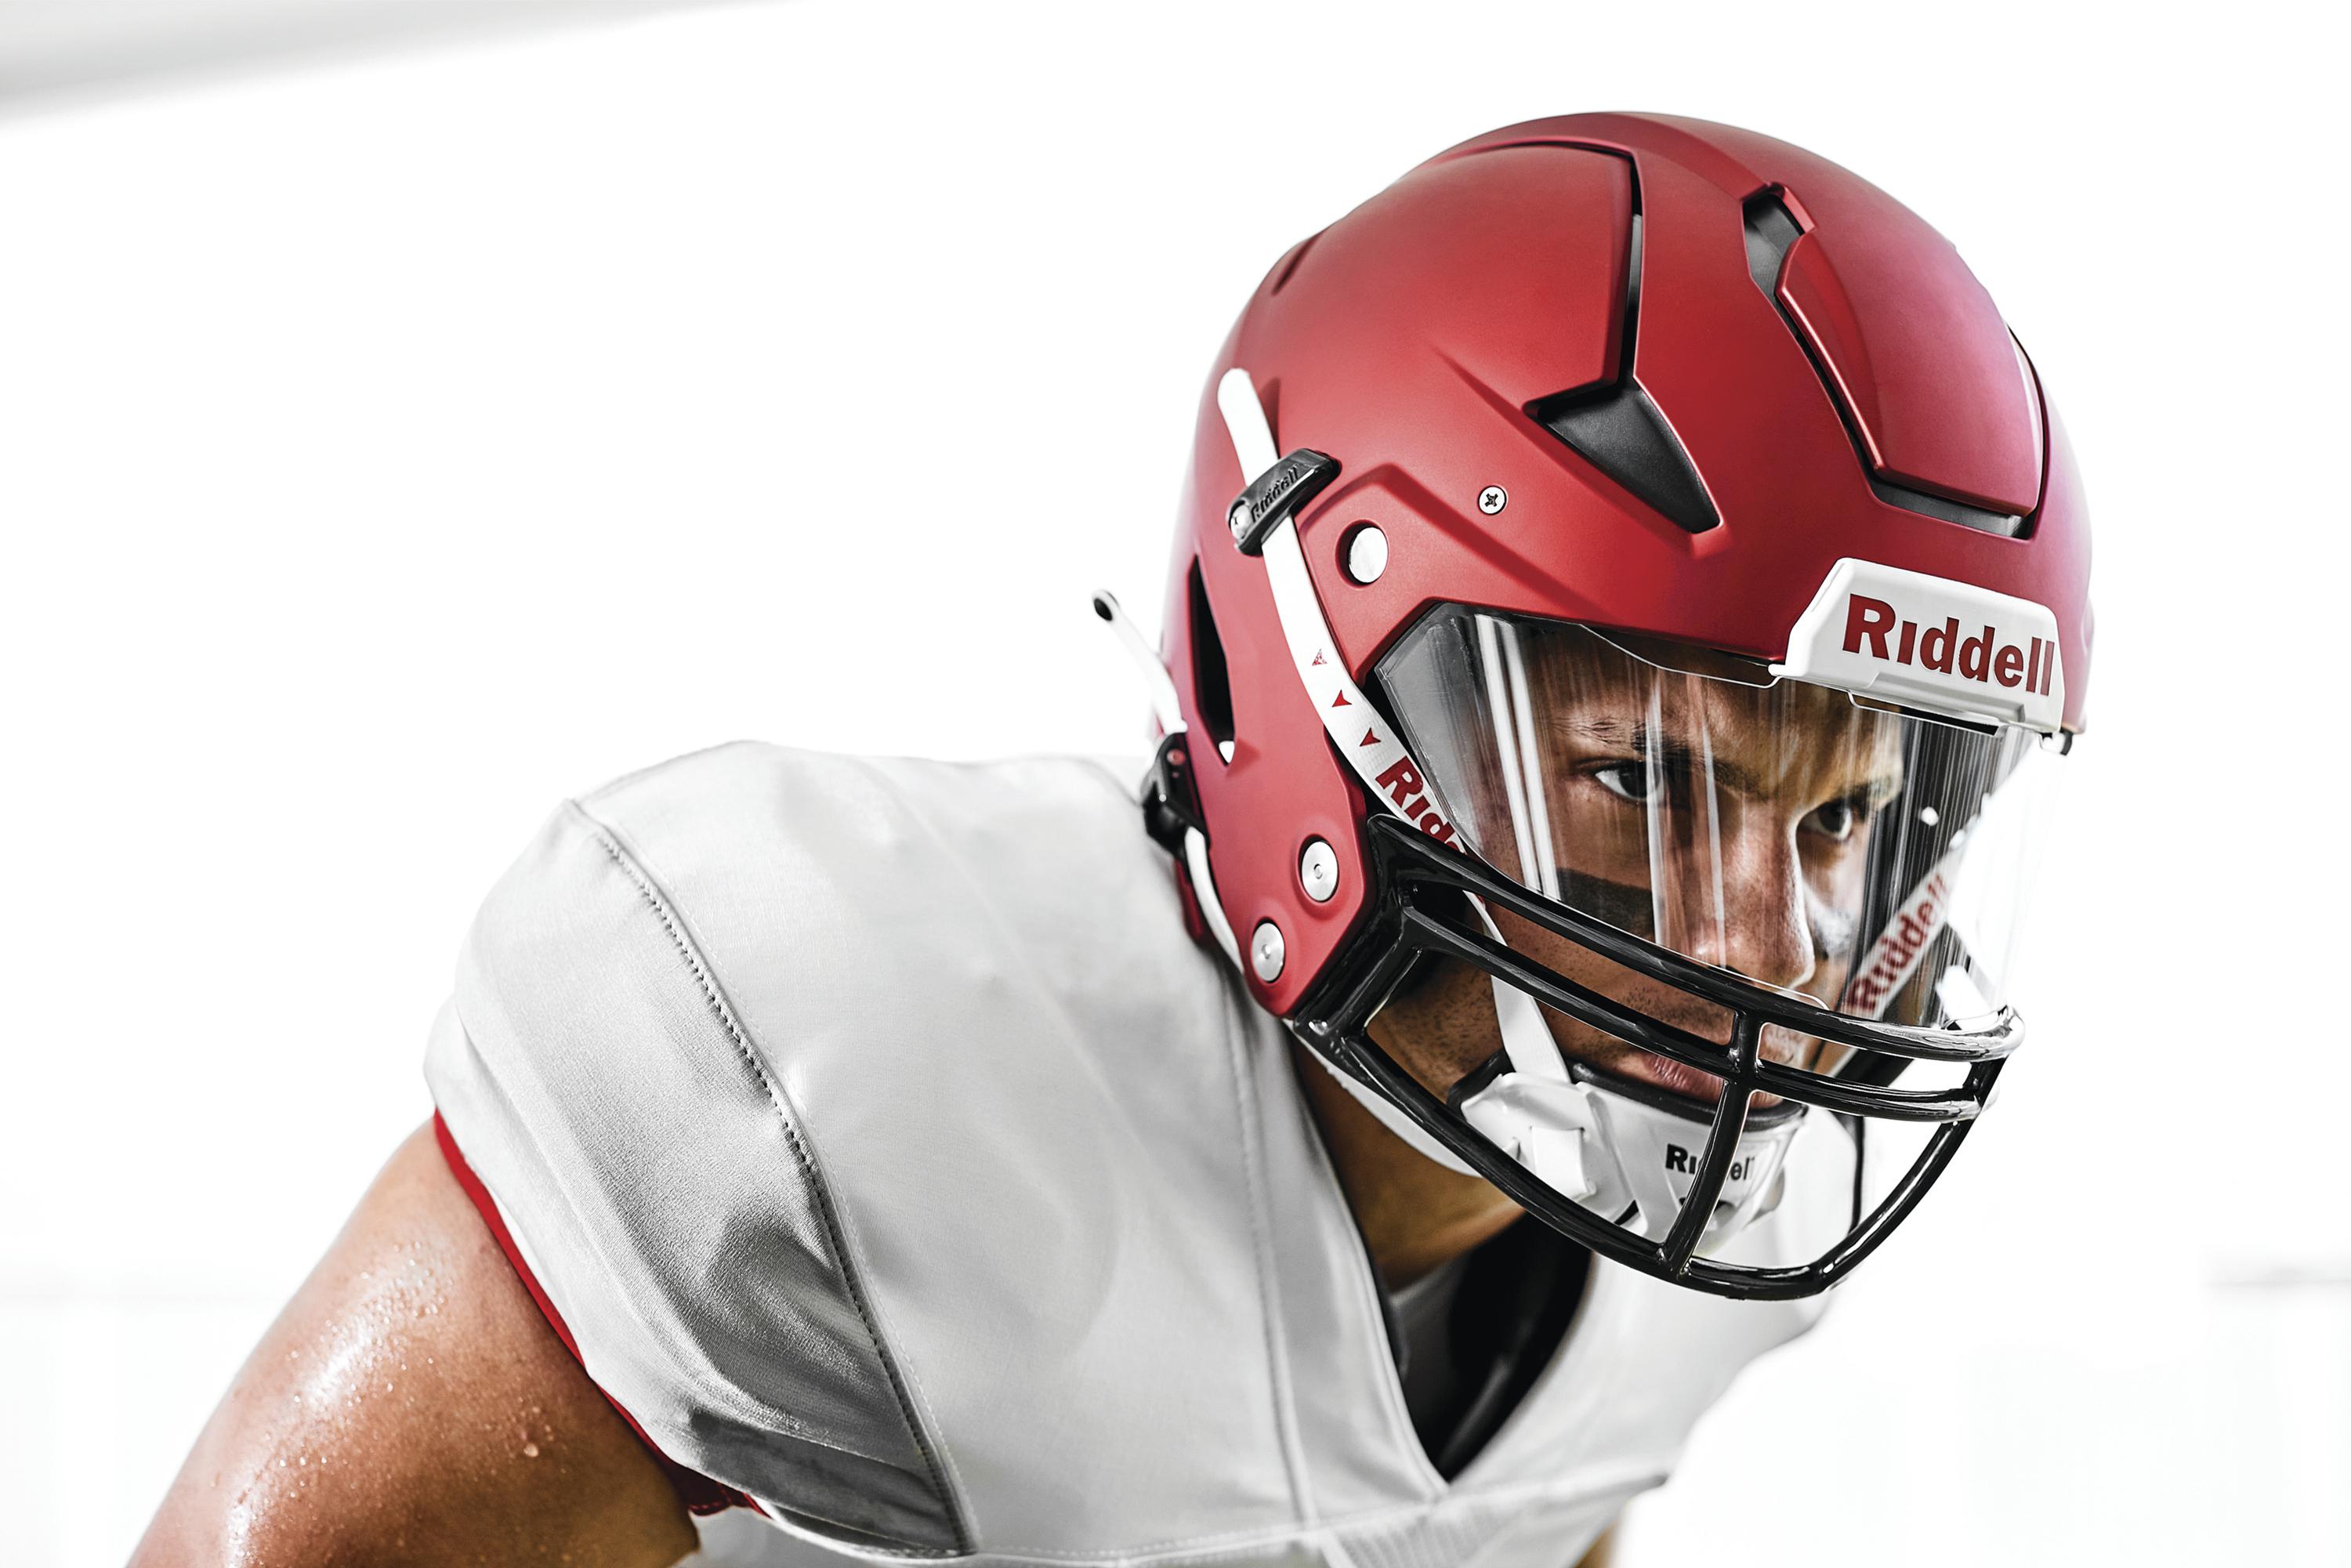 Riddell's Axiom could be breakthrough helmet for football AP News